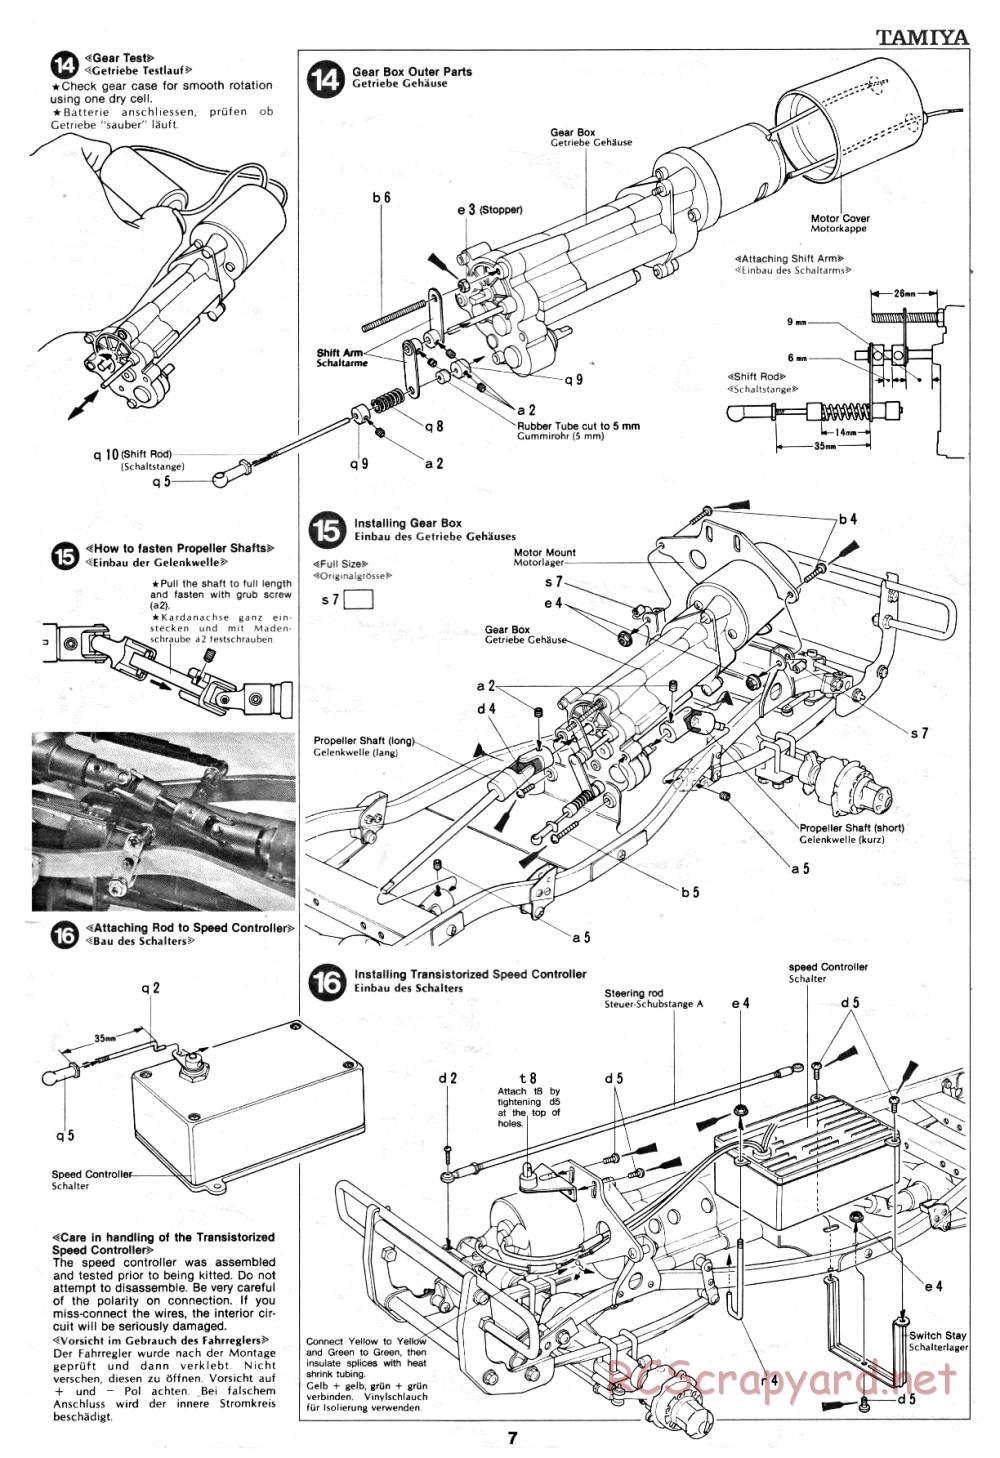 Tamiya - Toyota 4x4 Pick-Up - 58028 - Manual - Page 7